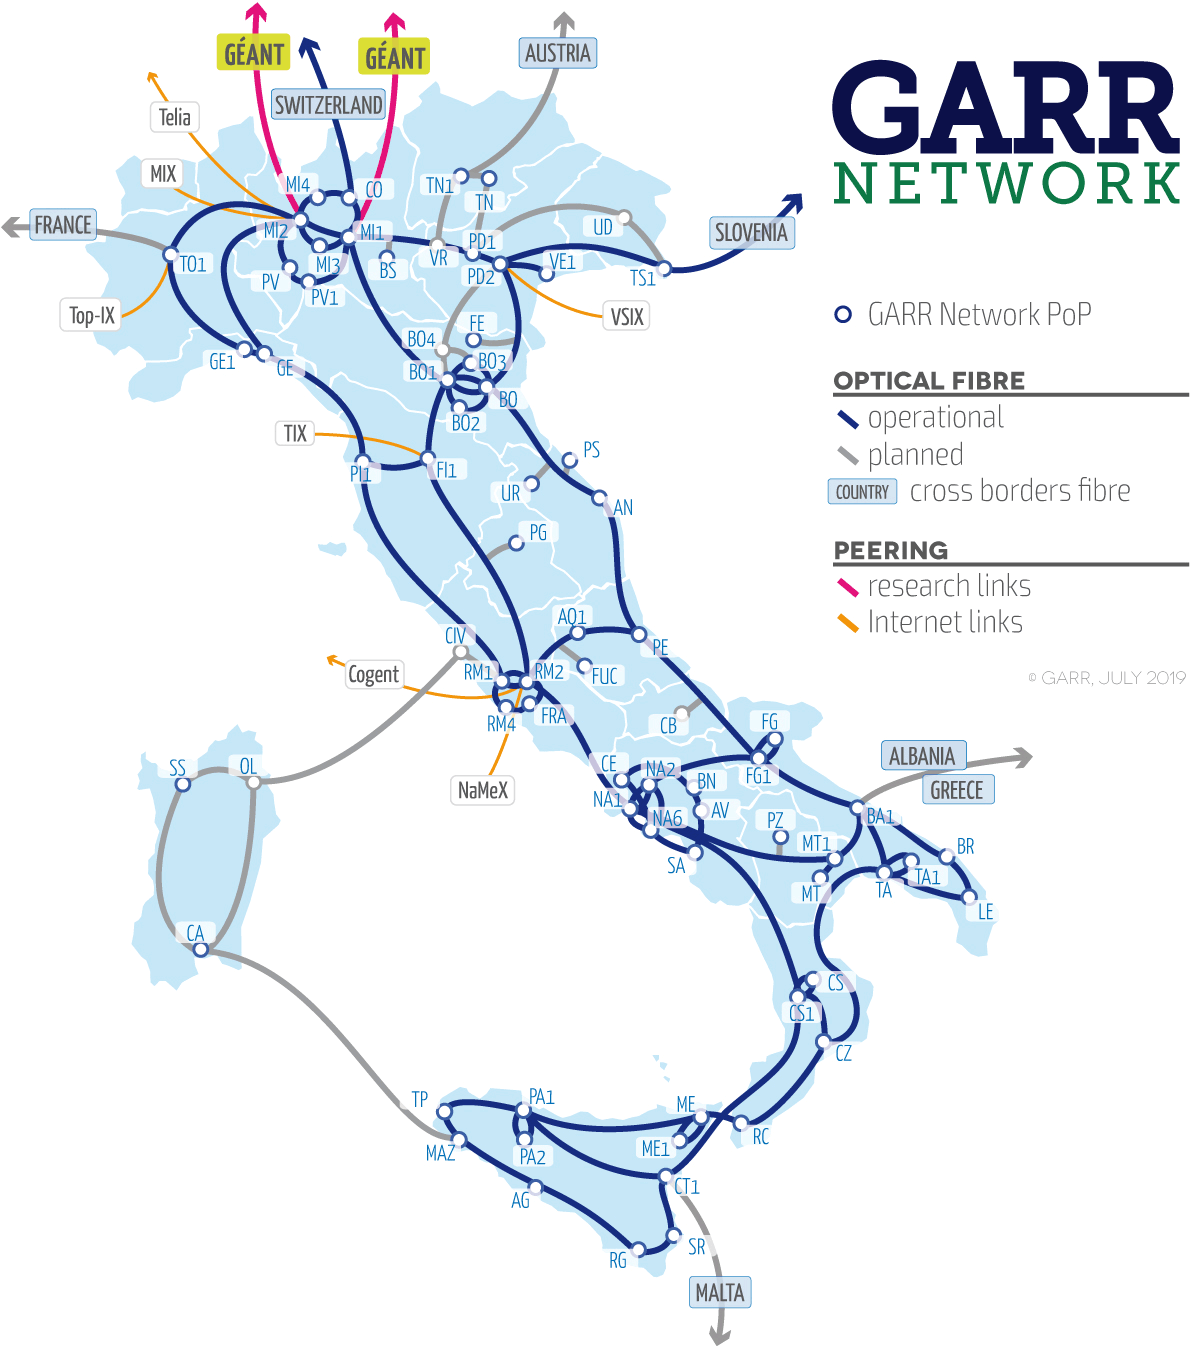 GARR Network